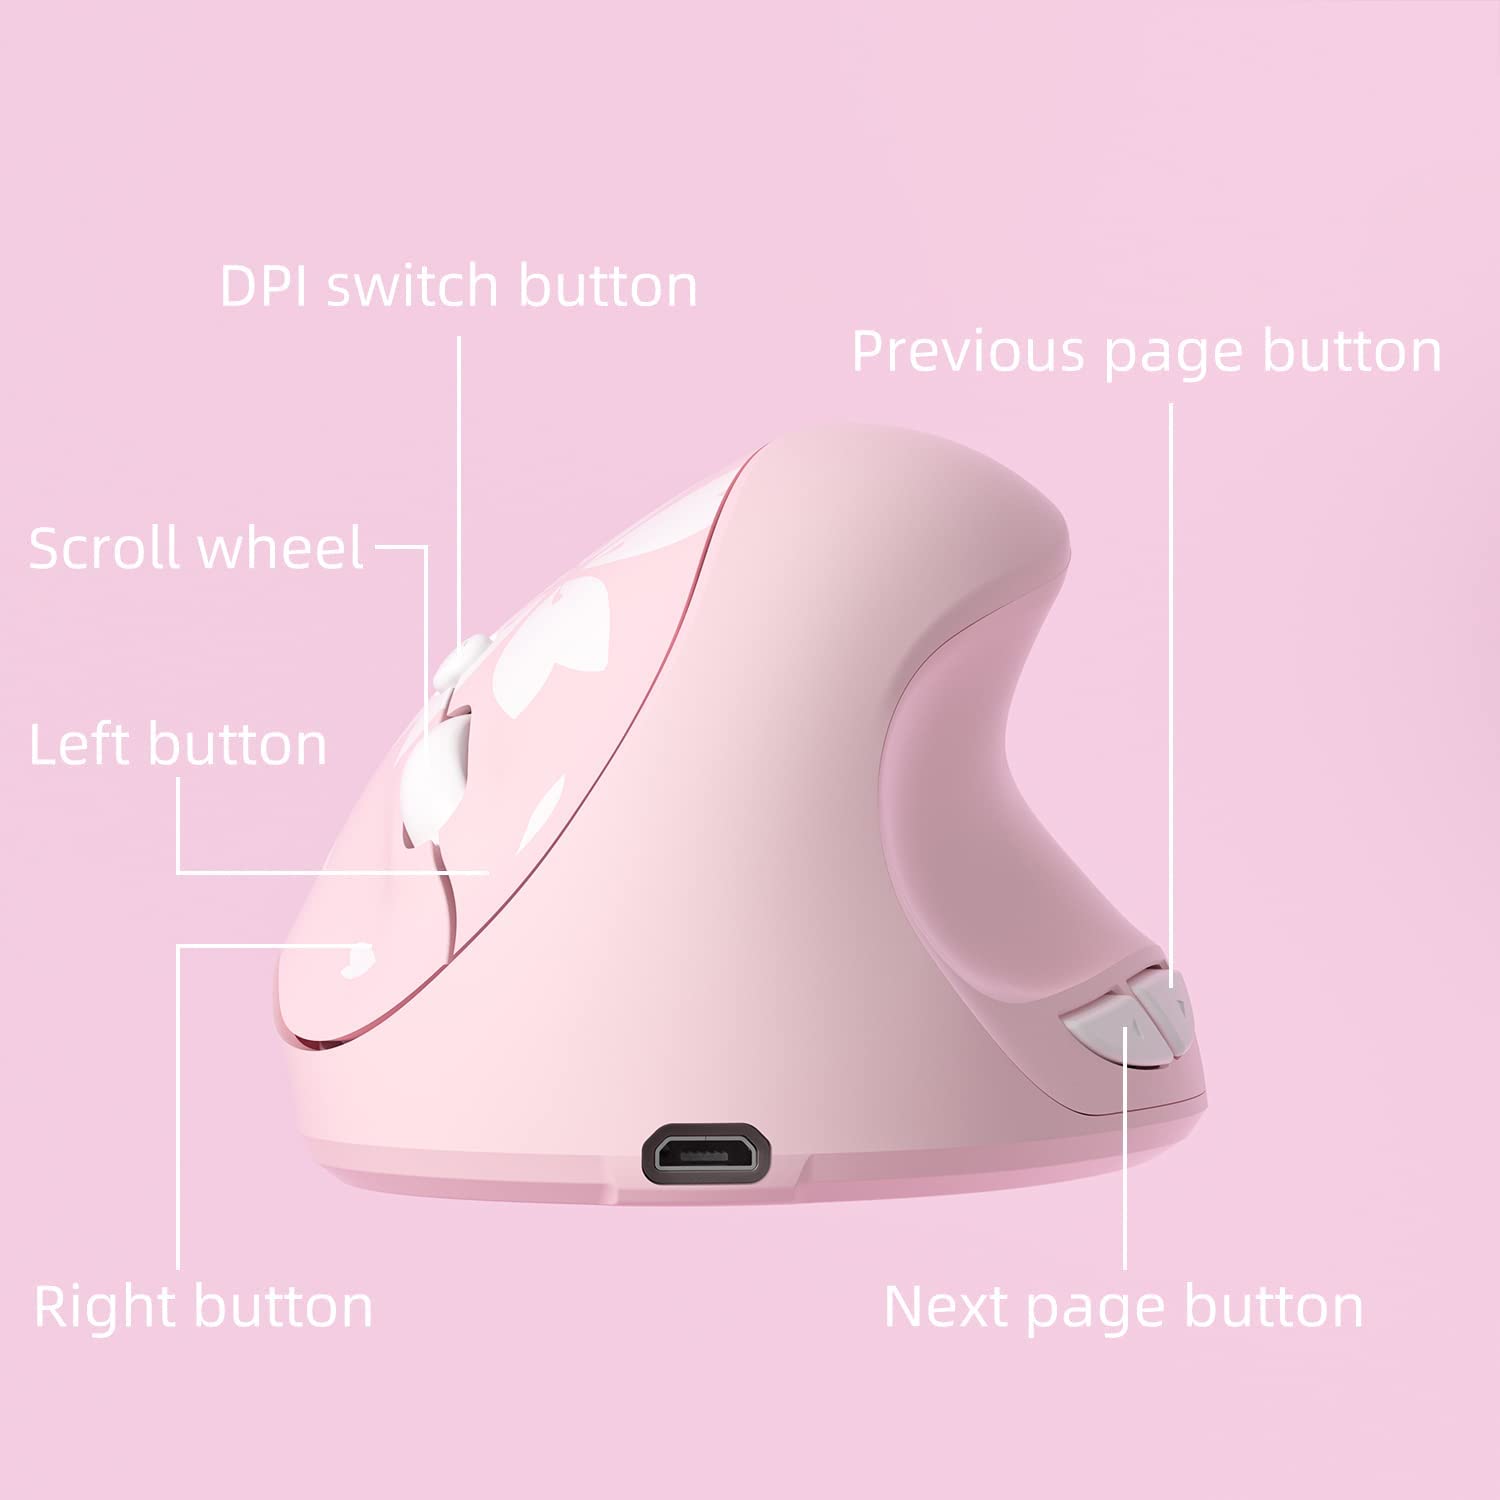 Mytrix Sakura Cherry Pink Wireless Ergonomic Vertical Mouse, 2.4GHz 800/1200/1600 DPI - Right Handed for Laptop, Desktop, Windows, Mac OS, Linux